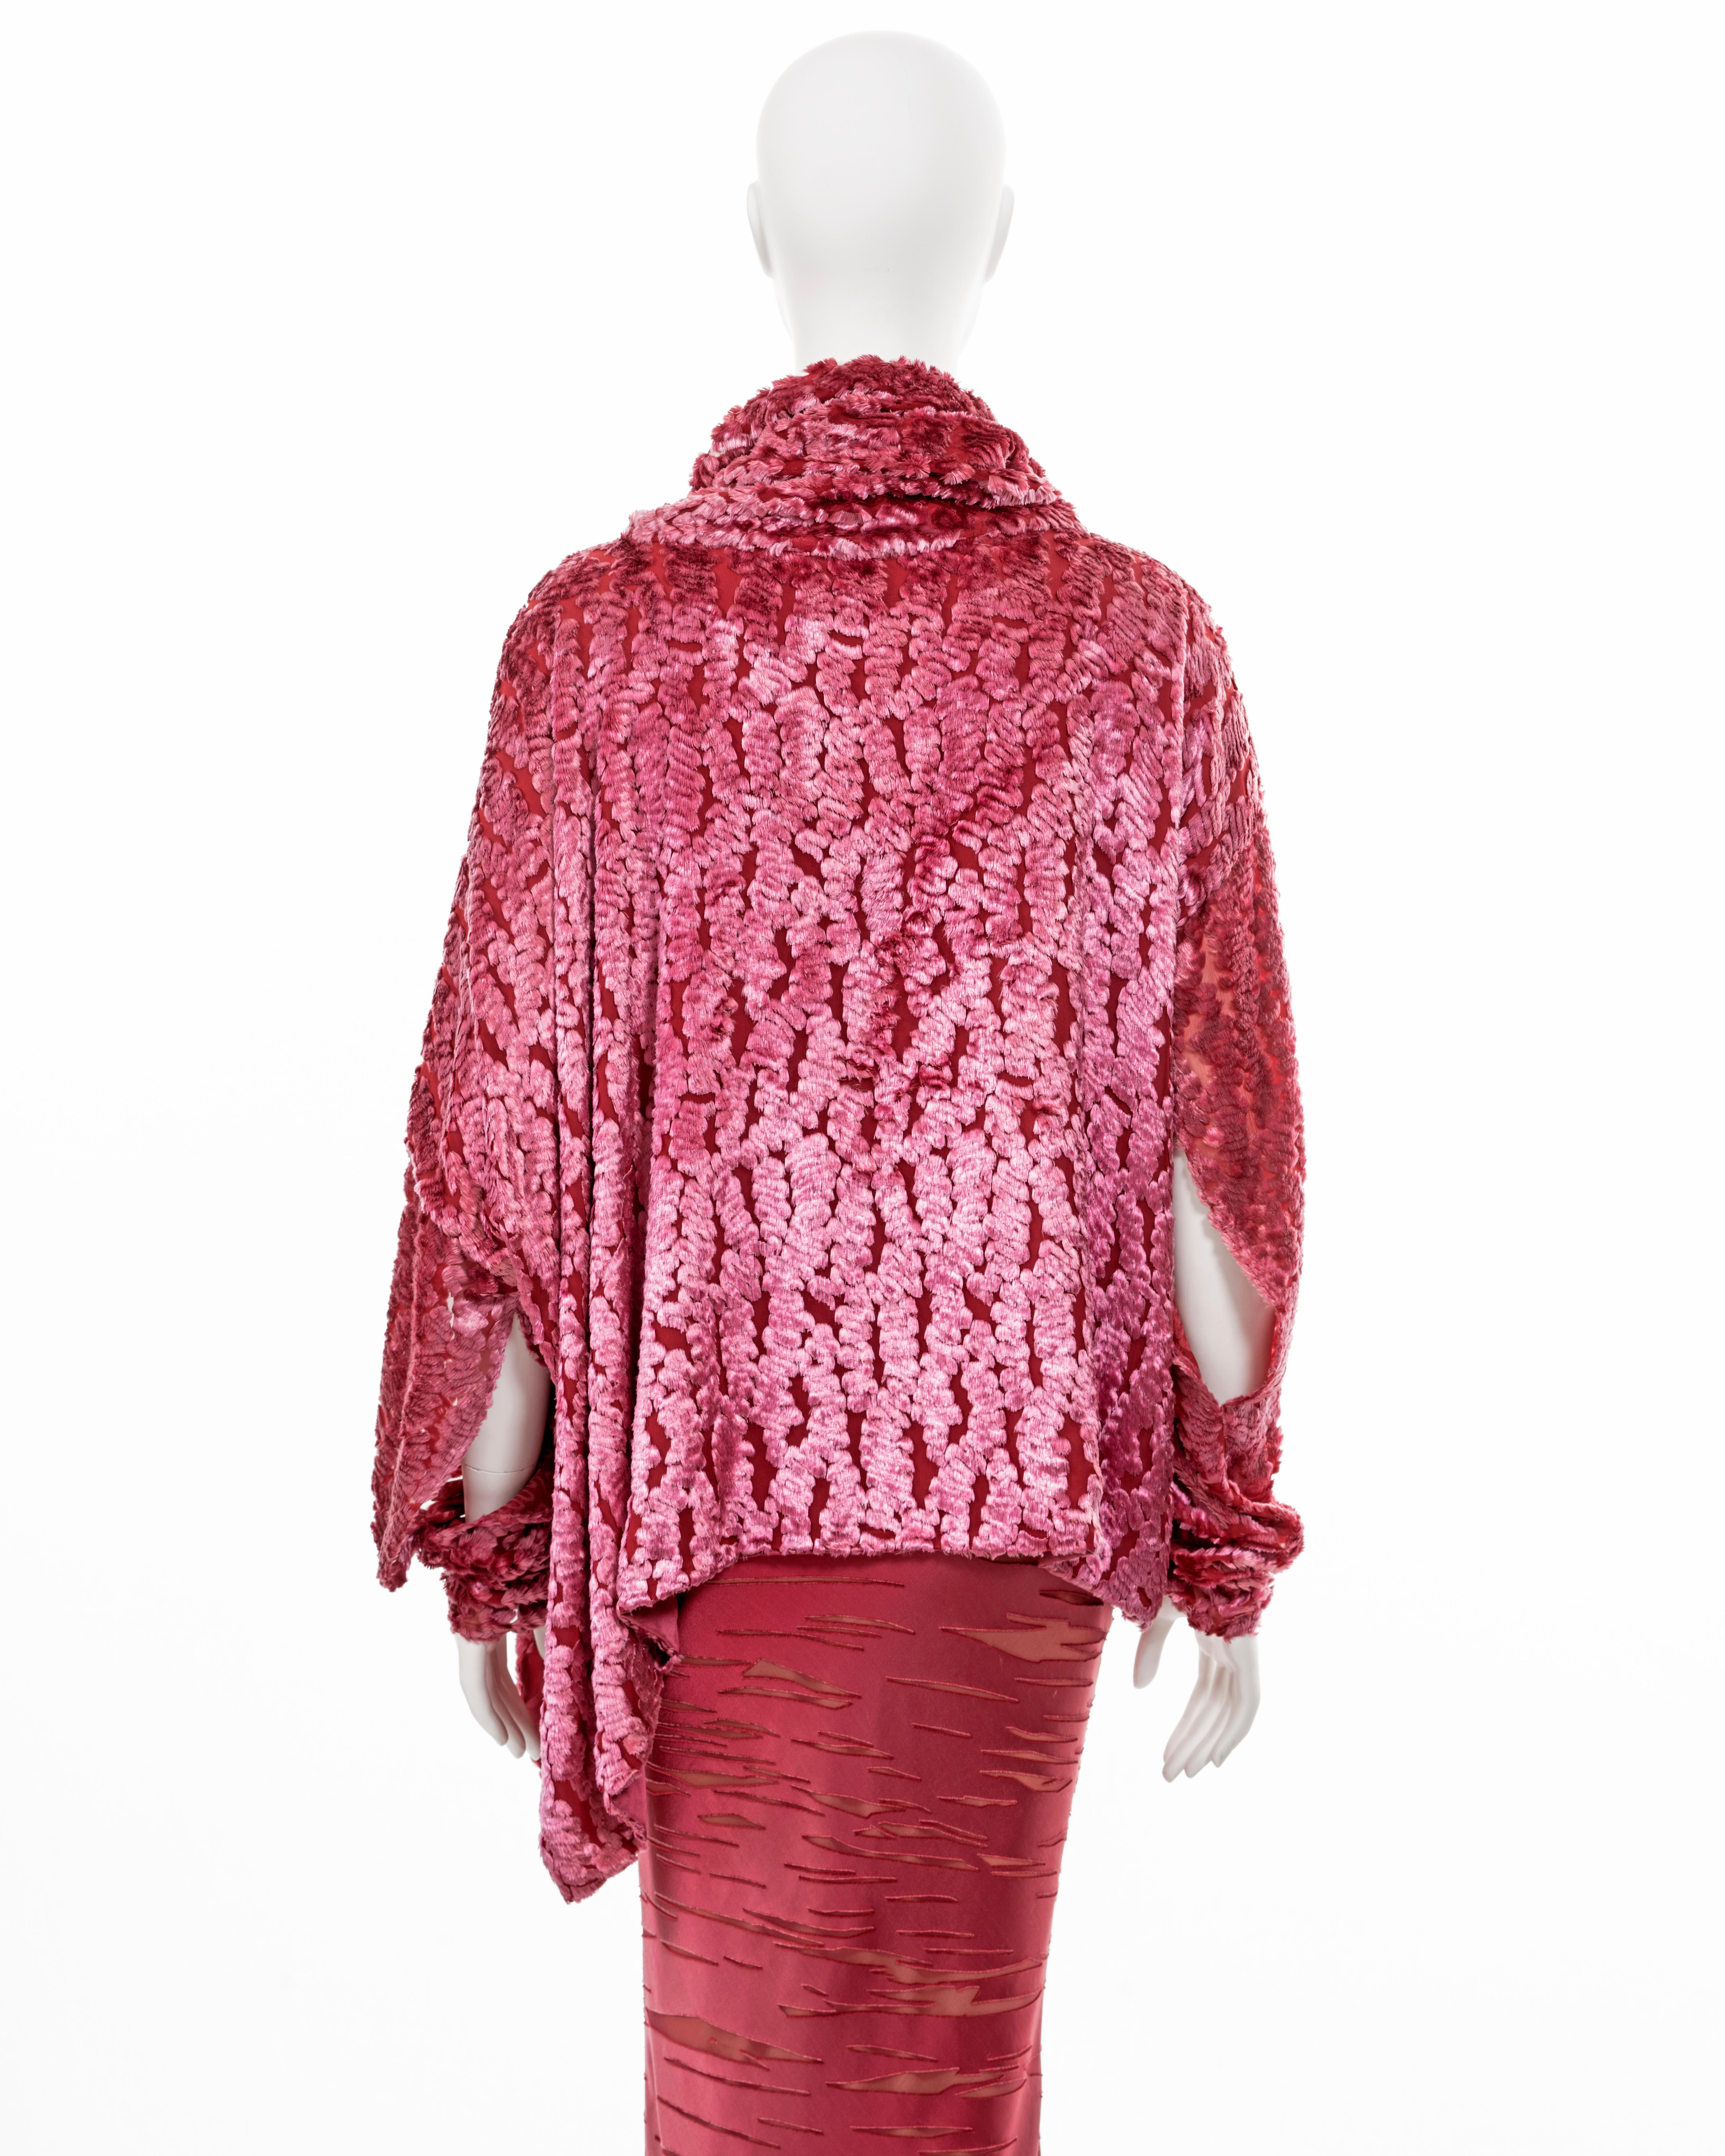 Christian Dior by John Galliano bias cut evening dress and sweater, fw 2000 10